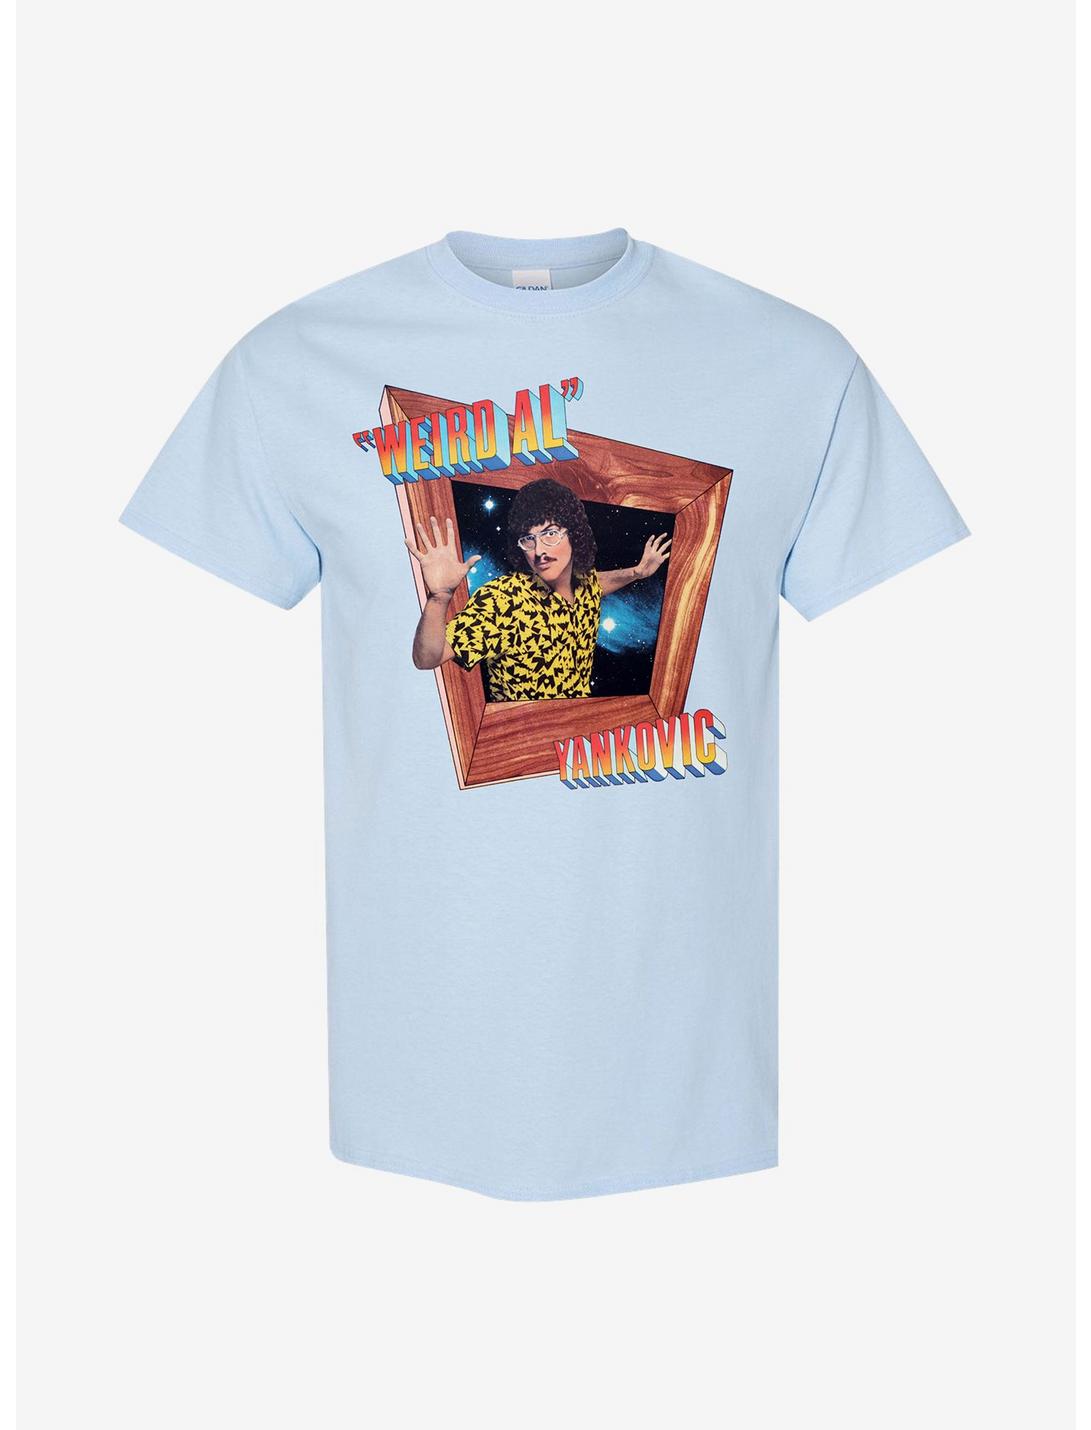 Weird Al Yankovic In 3-D Album Cover T-Shirt, BLUE, hi-res